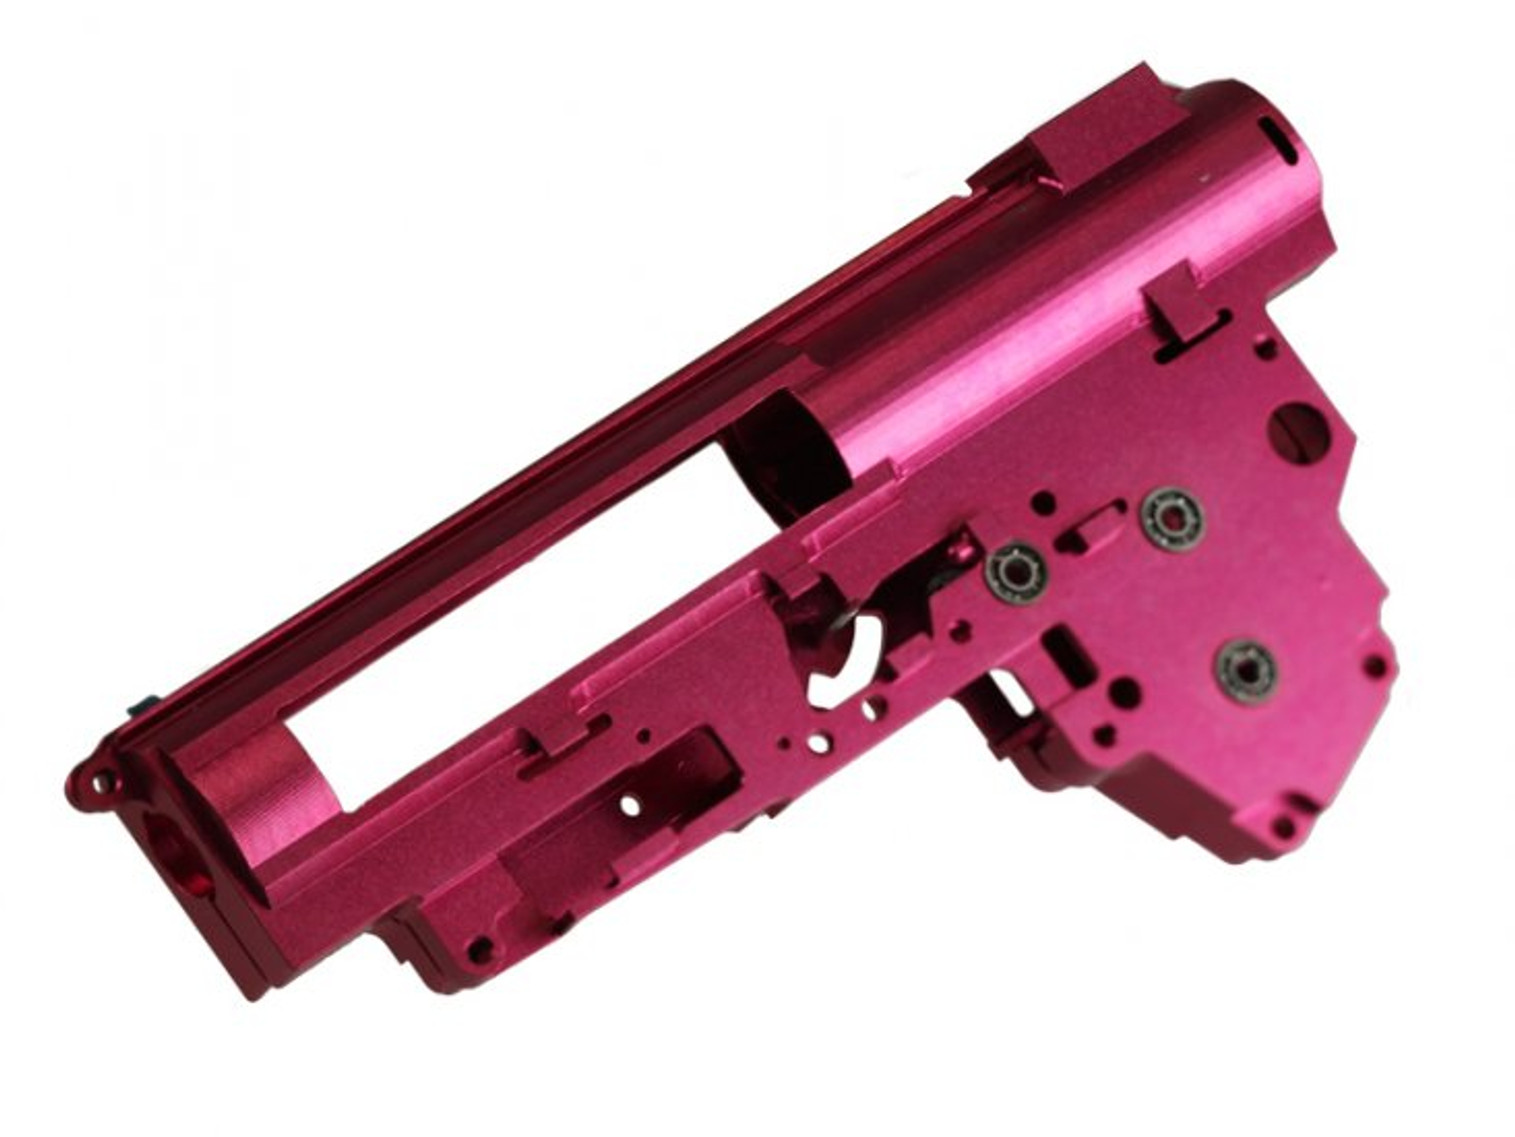 Super Shooter CNC 8mm Gear Box - Version 3